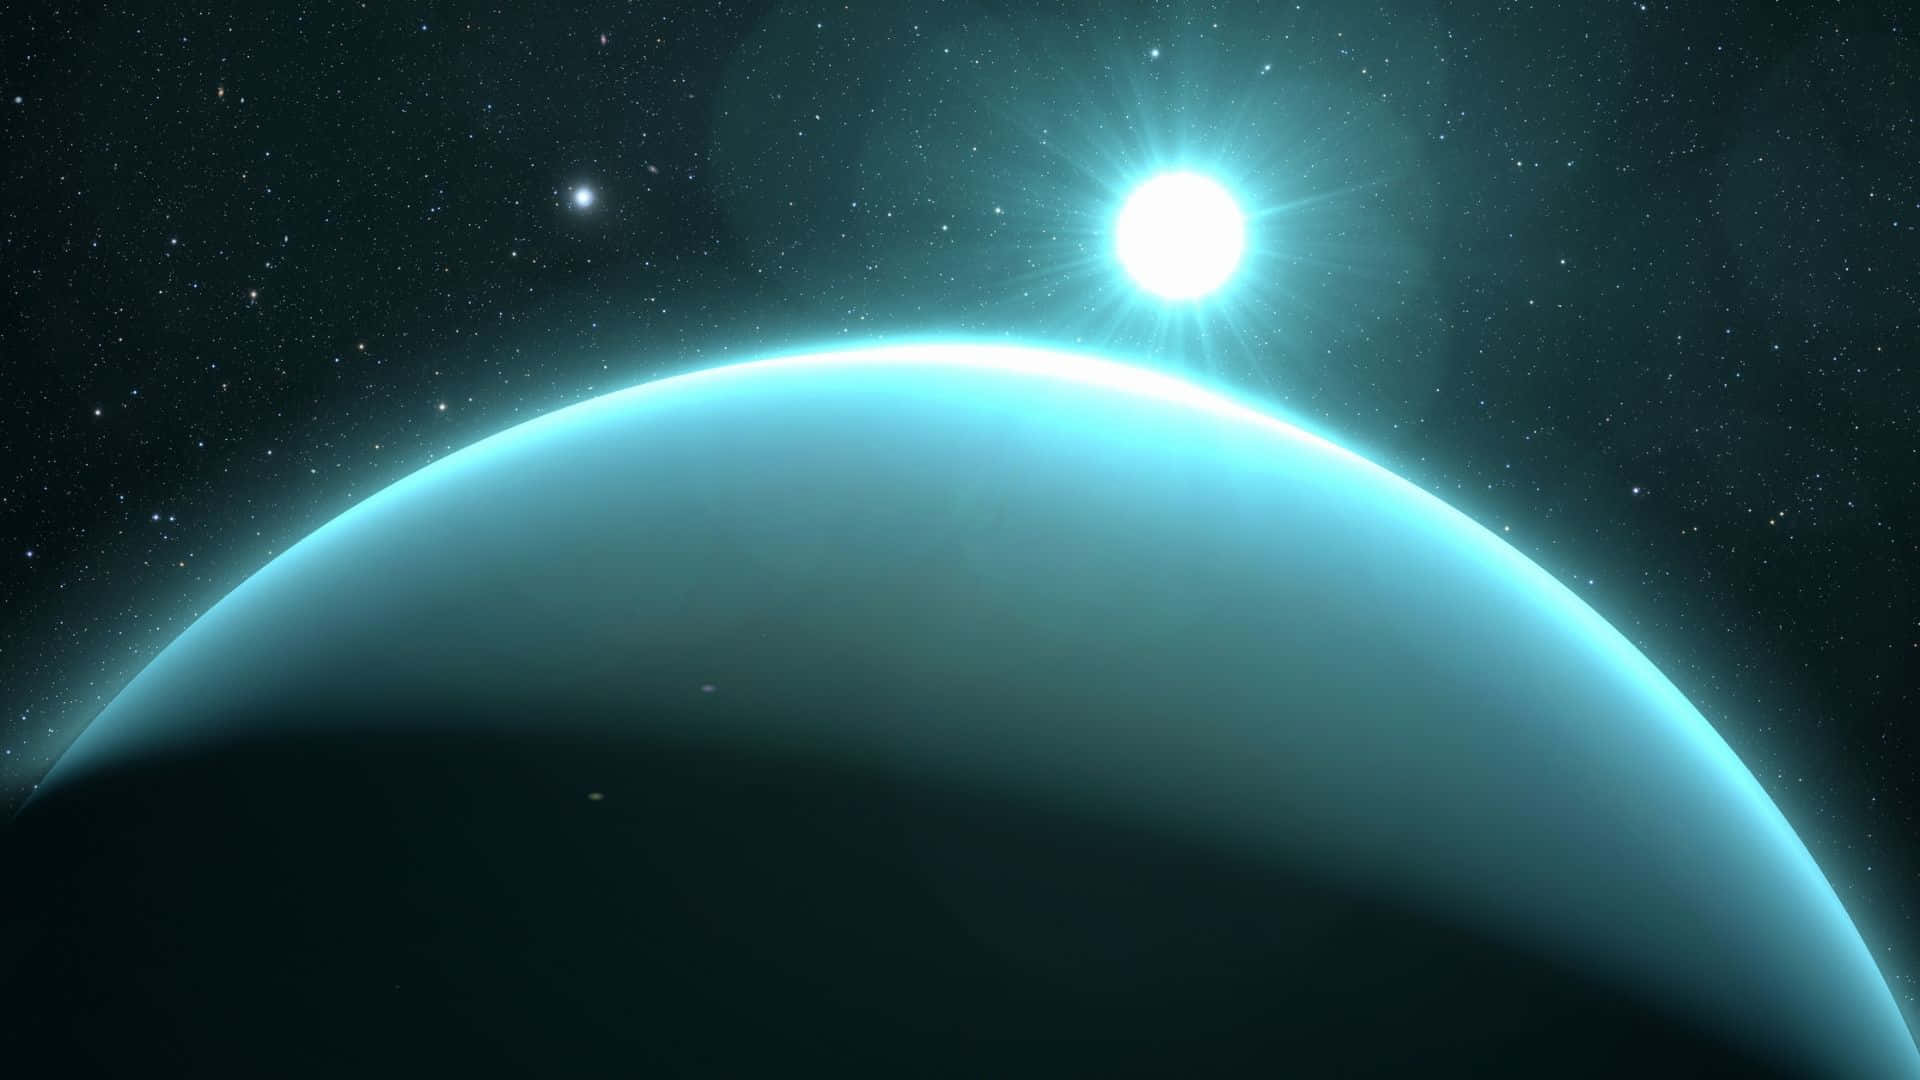 Stunning High-Quality Image of Planet Uranus